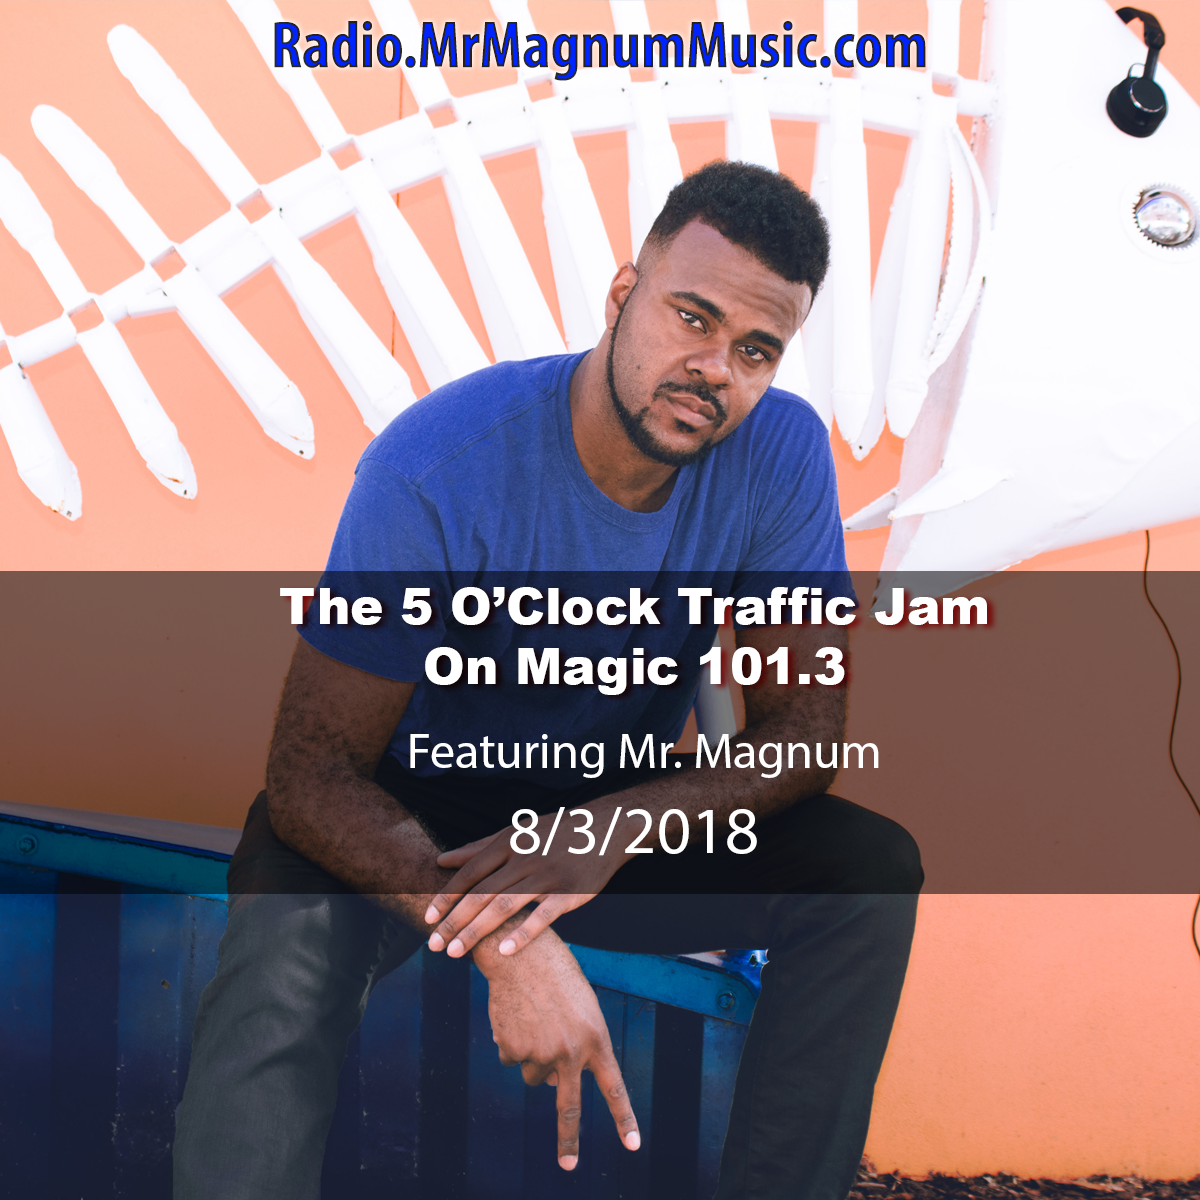 The 5 O'Clock Traffic Jam 20180803 featuring Gainesville's #1 DJ, Mr. Magnum on Magic 101.3